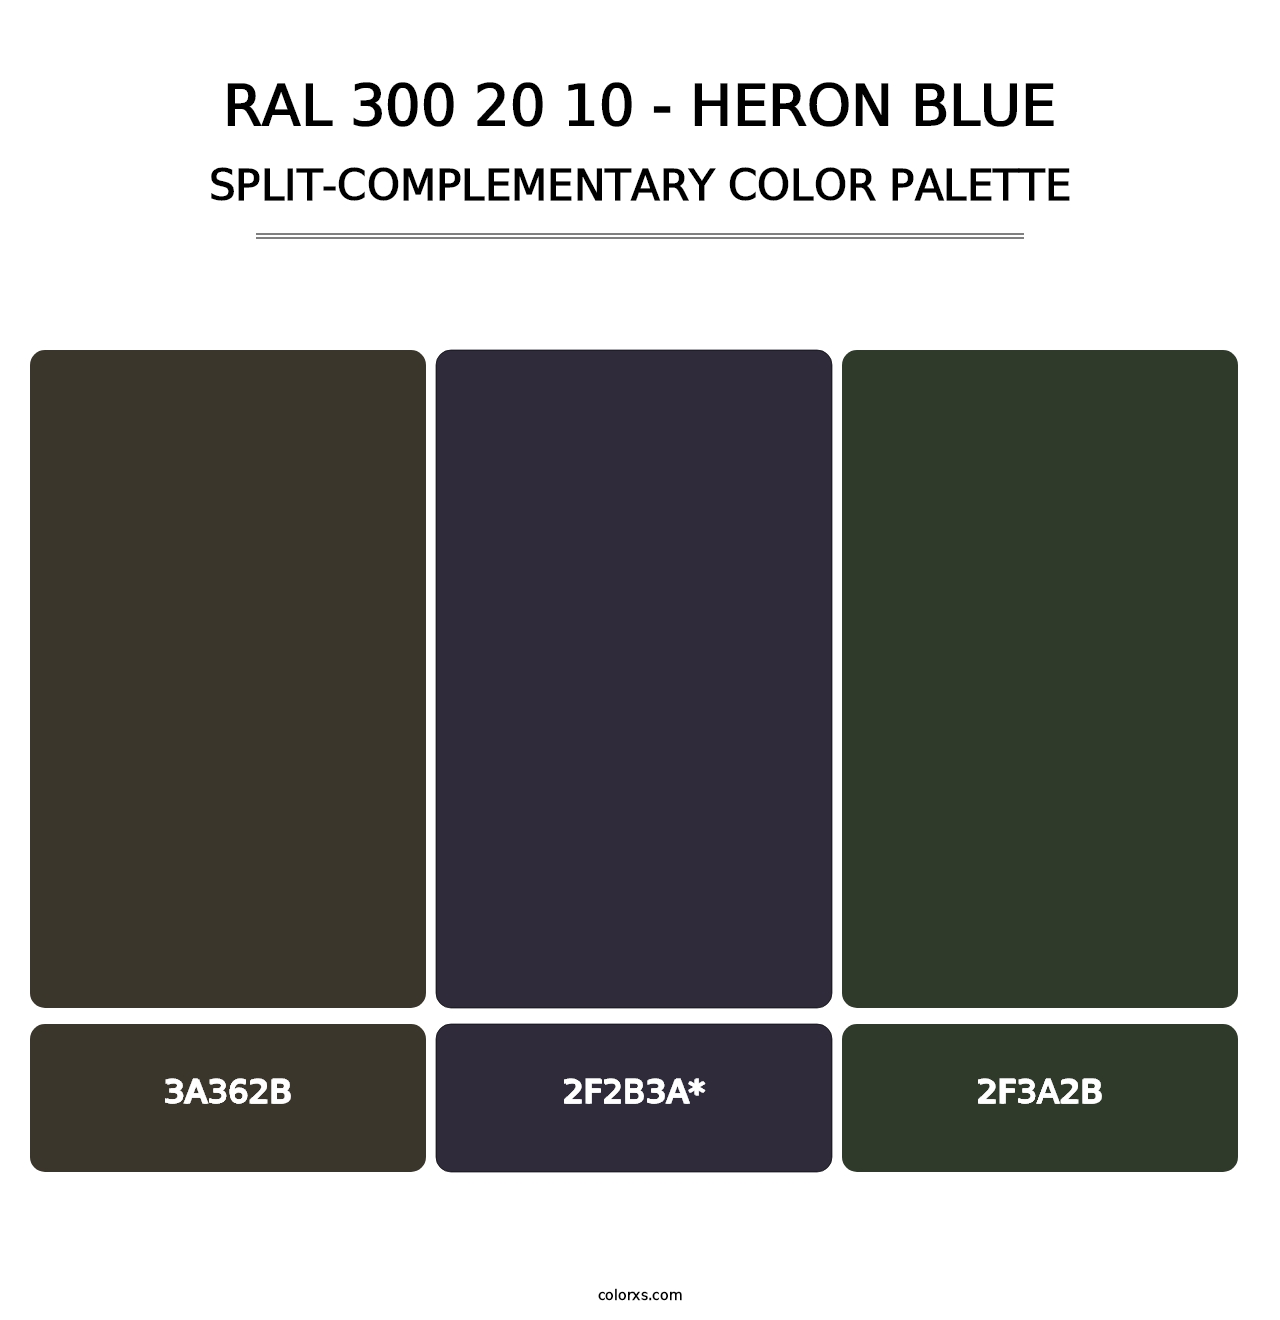 RAL 300 20 10 - Heron Blue - Split-Complementary Color Palette